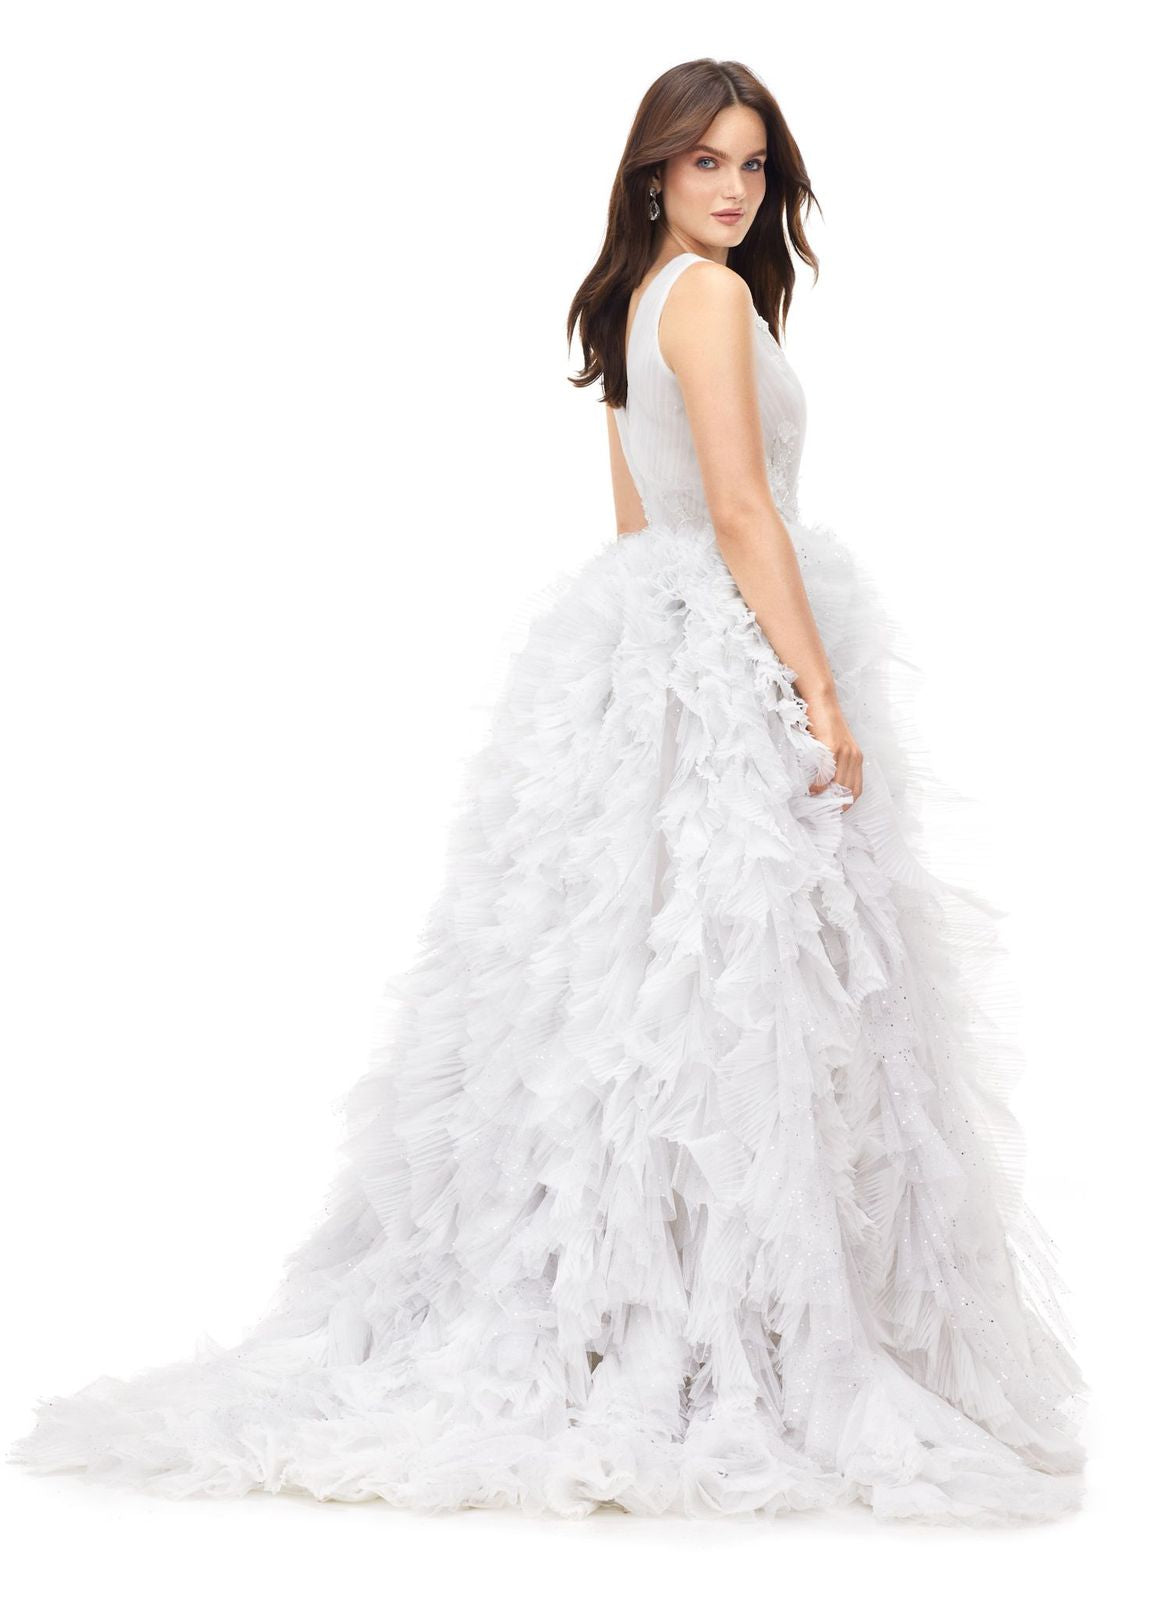 Ashley Lauren 11233 Tulle V-Neck Prom Dress Ball Gown with Ruffle Skirt